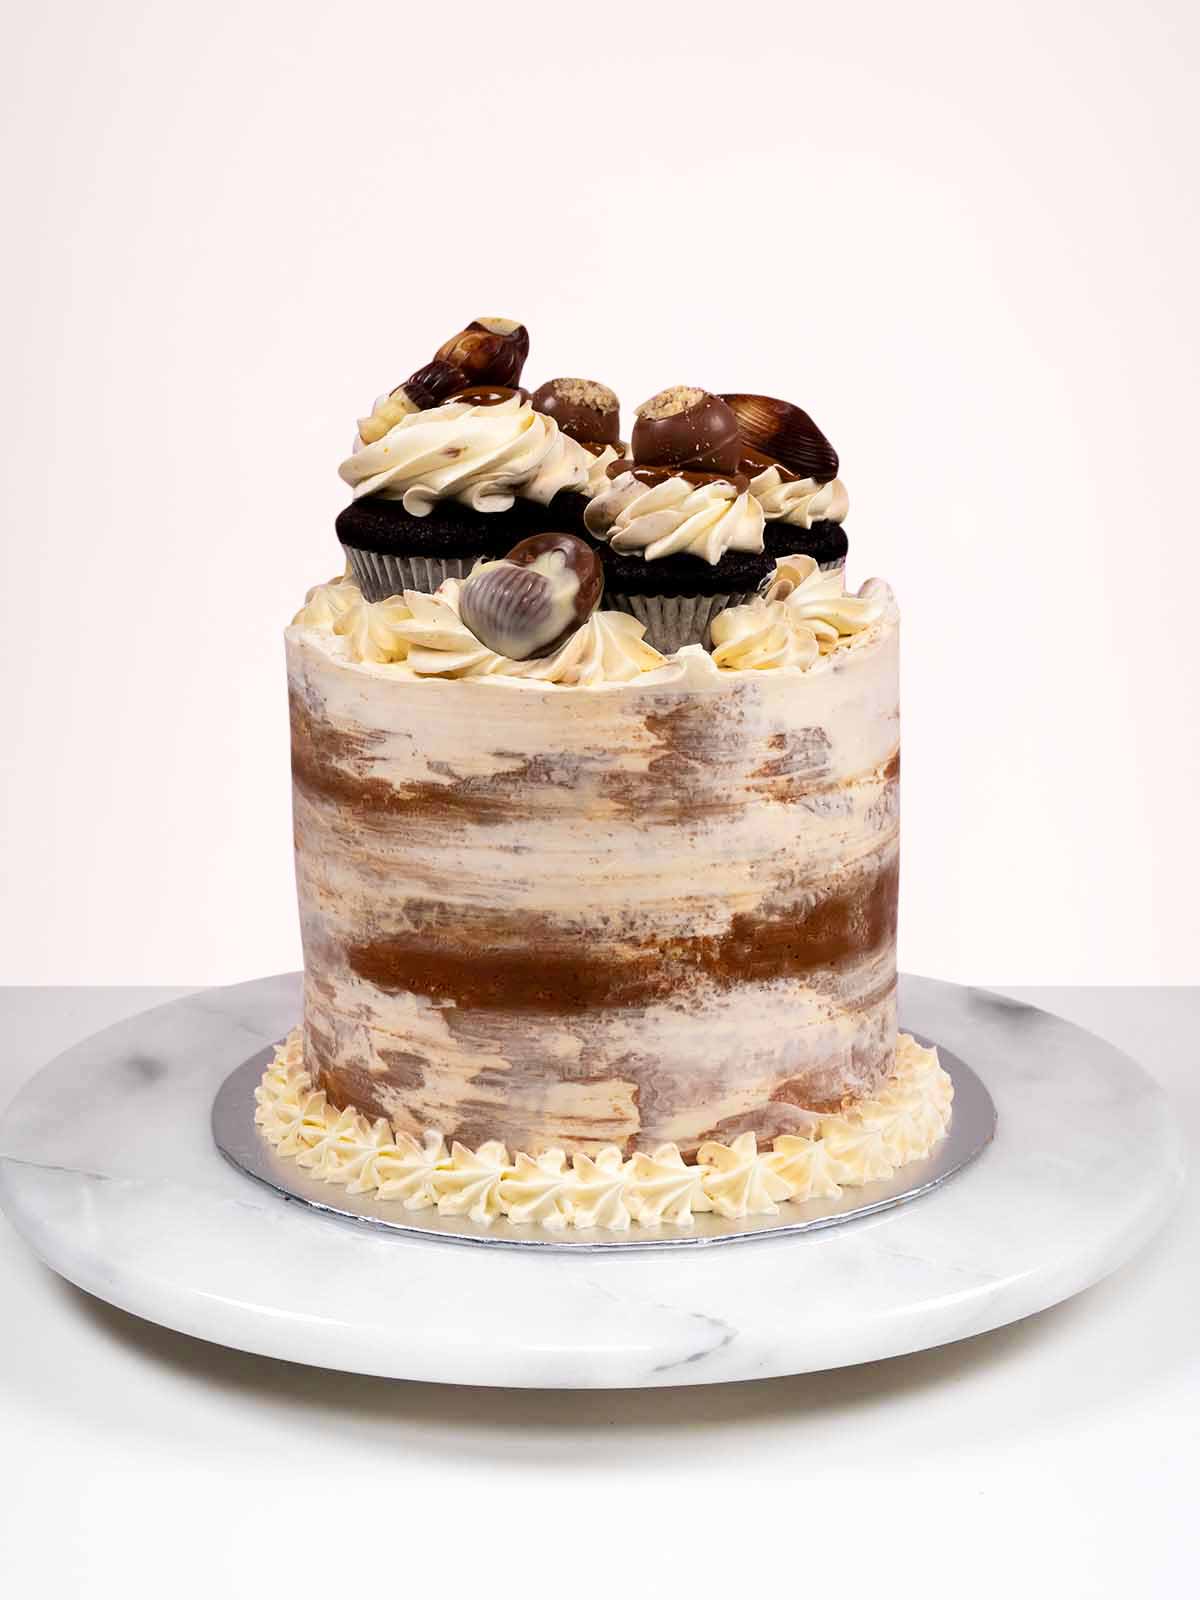 Boys 18th & 21st Birthday Cakes - sweet fantasies cakes -